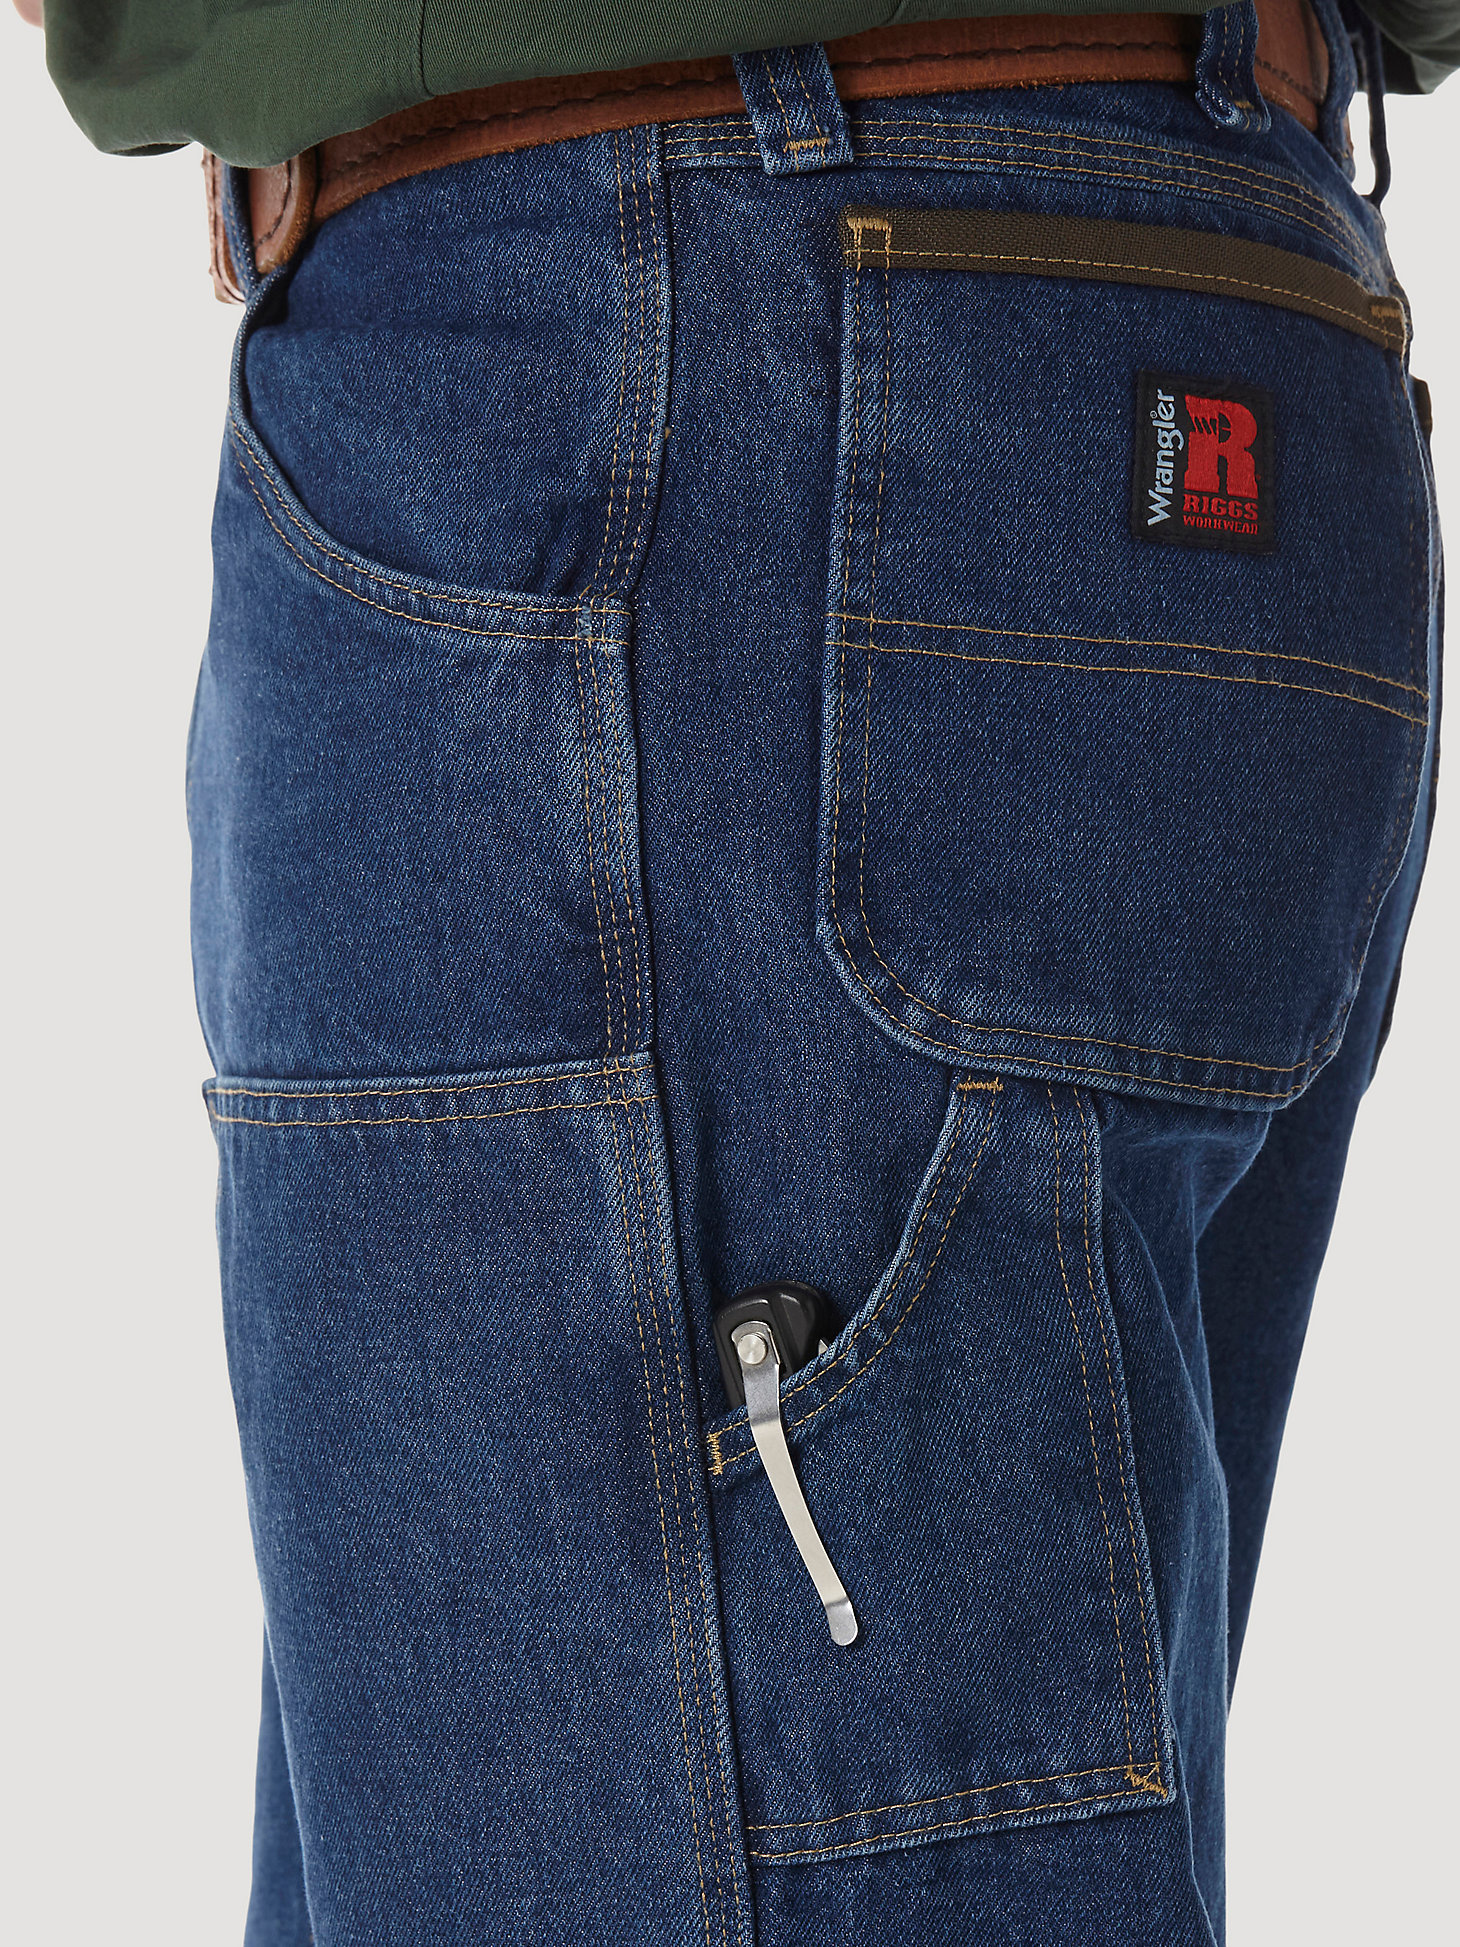 Wrangler® RIGGS Workwear® Utility Jean in Antique Indigo alternative view 6